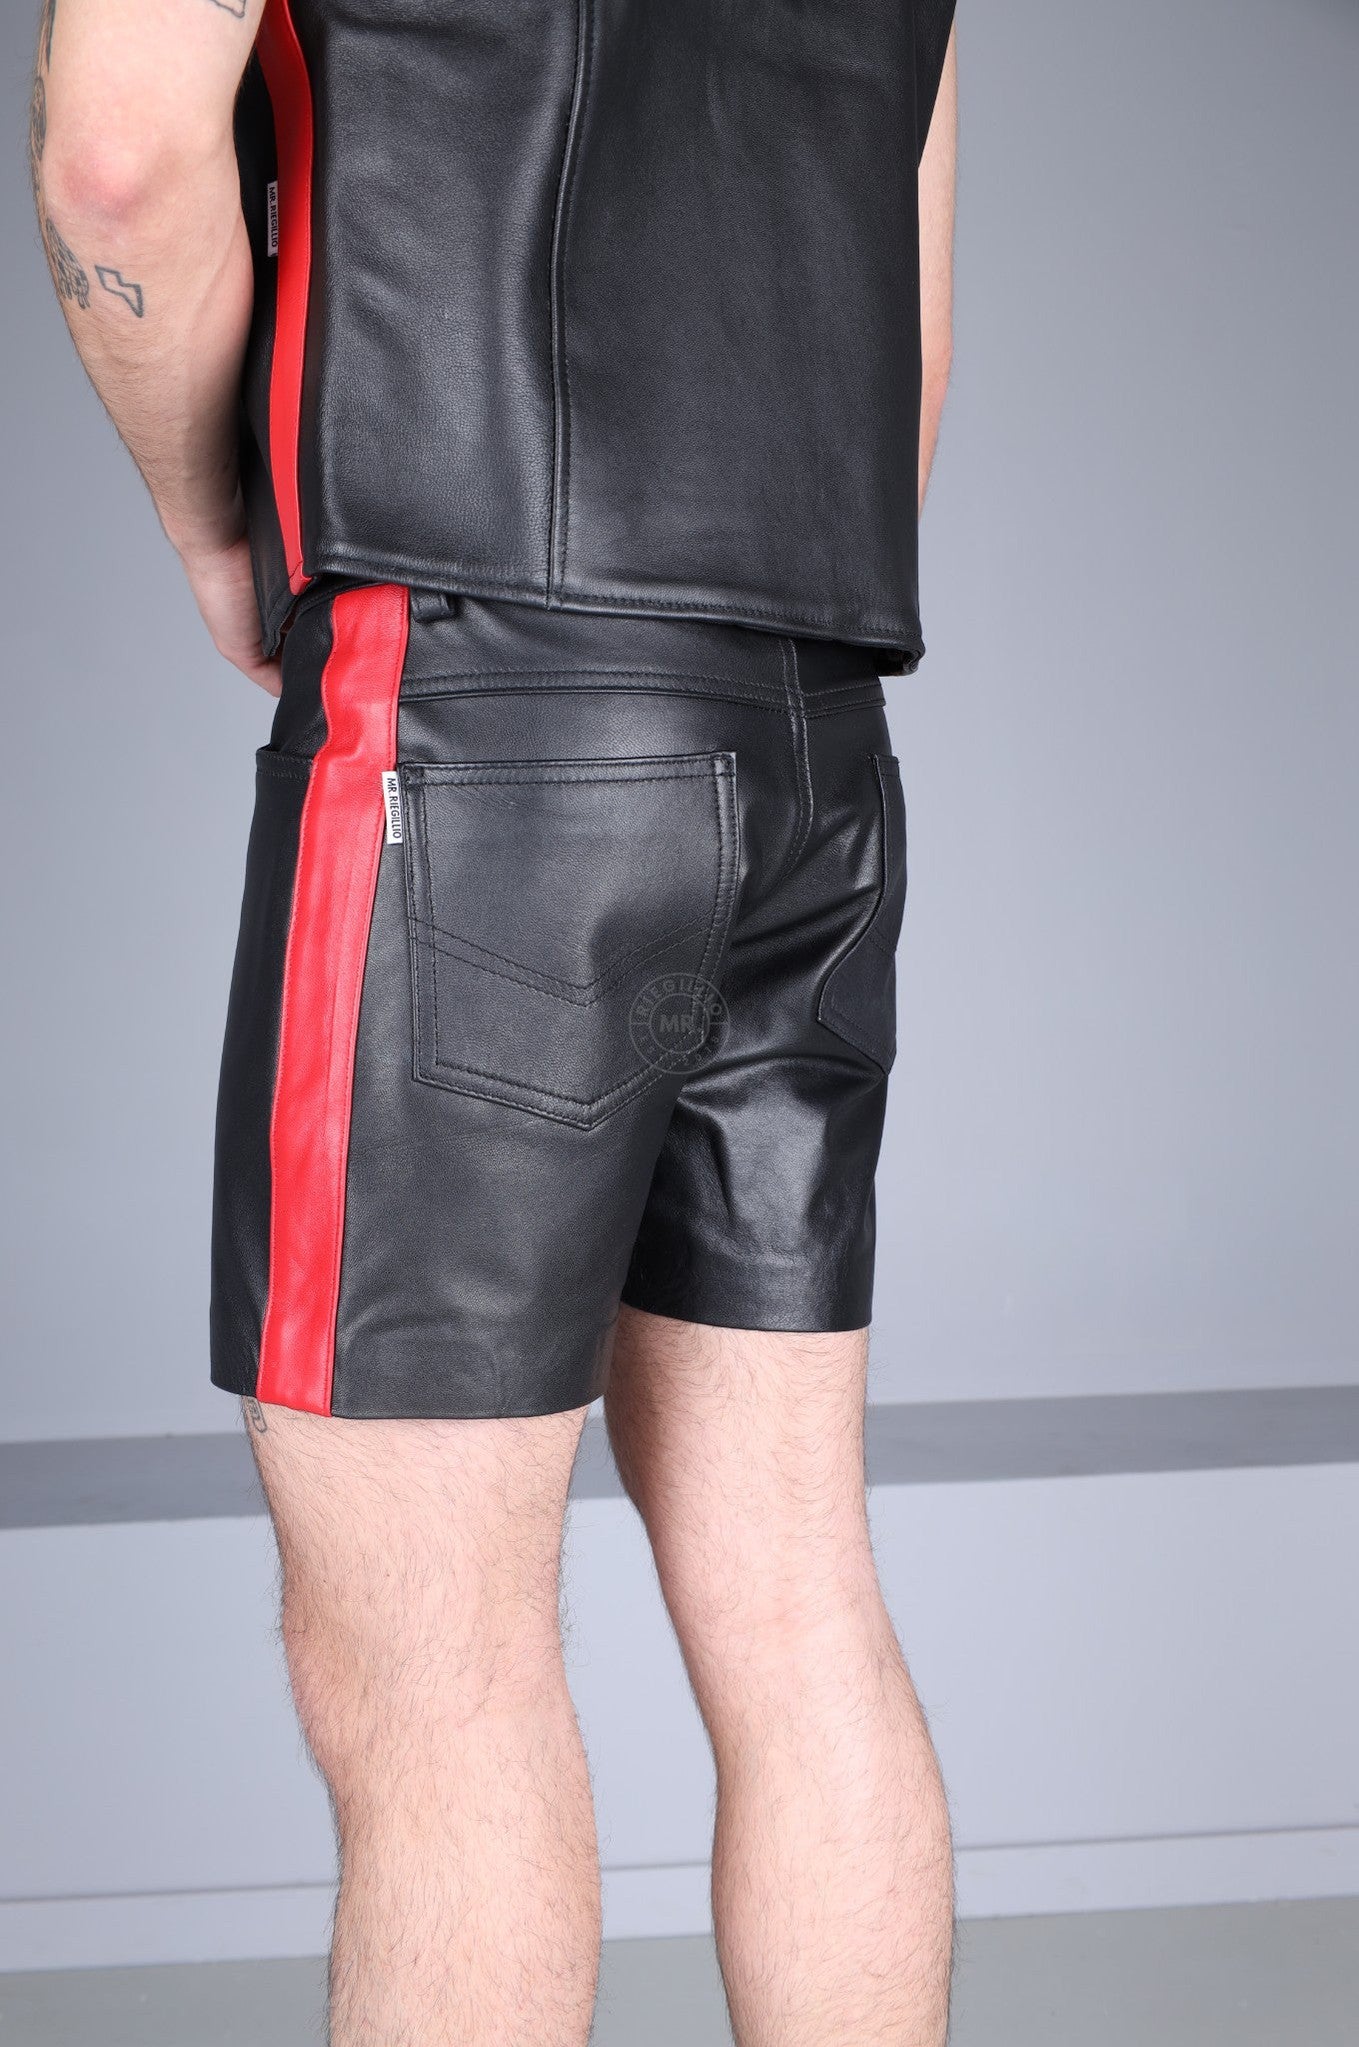 Black Leather 5 Pocket Short - Red Stripe at MR. Riegillio